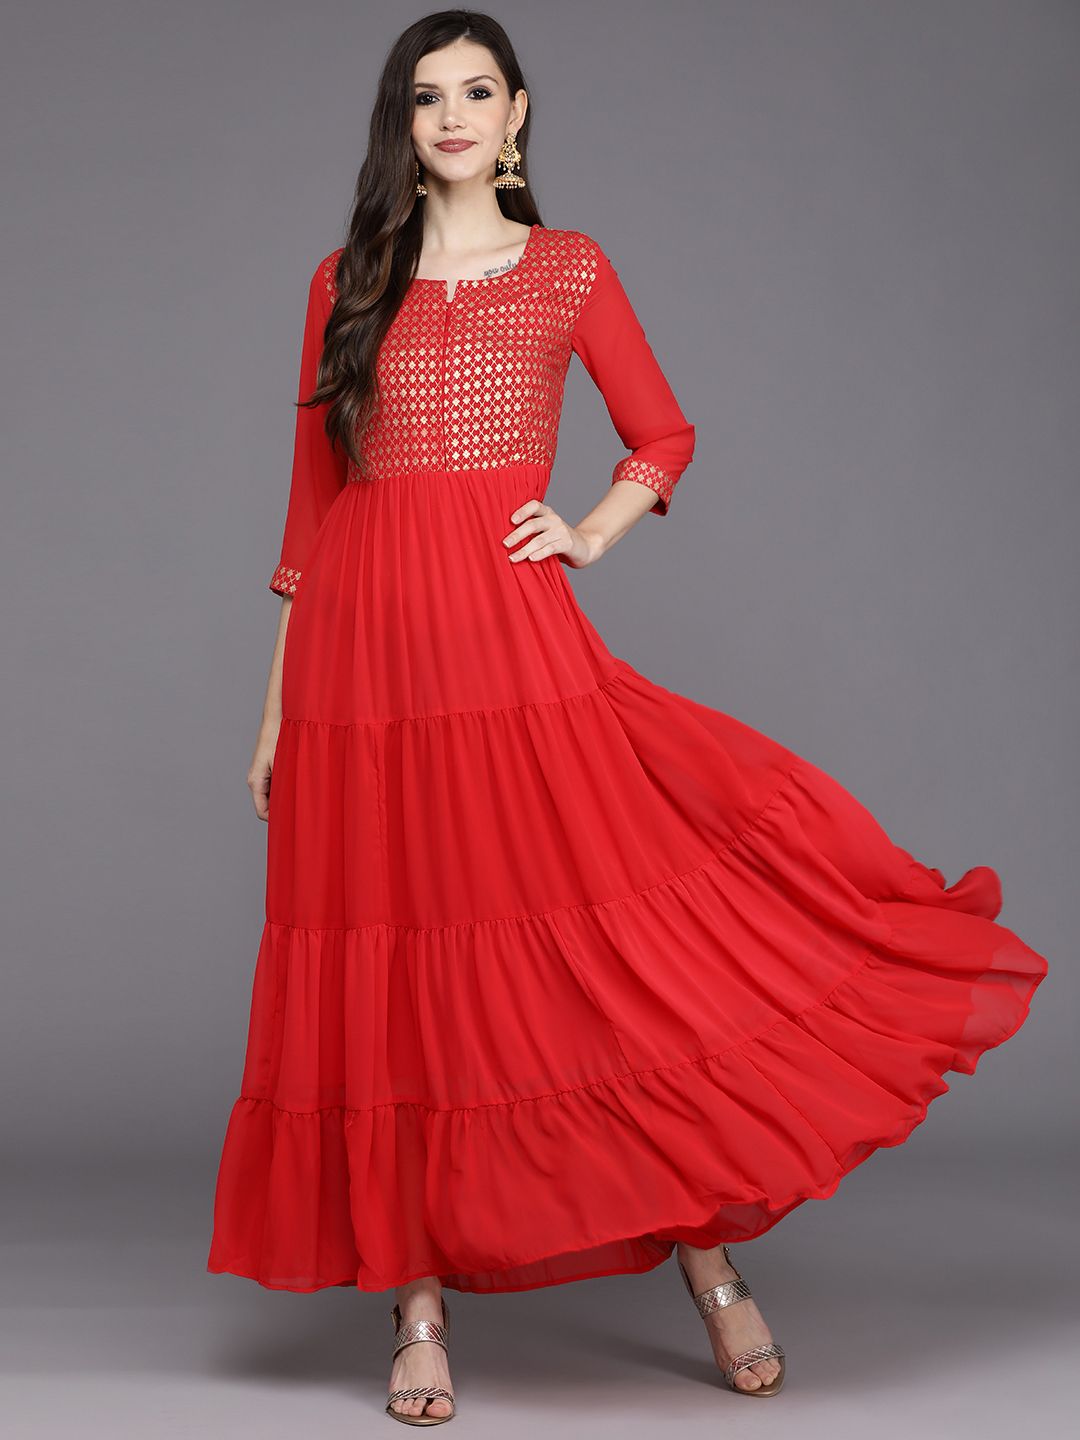 Biba Red & Golden Yoke Print Tiered Maxi Dress Price in India